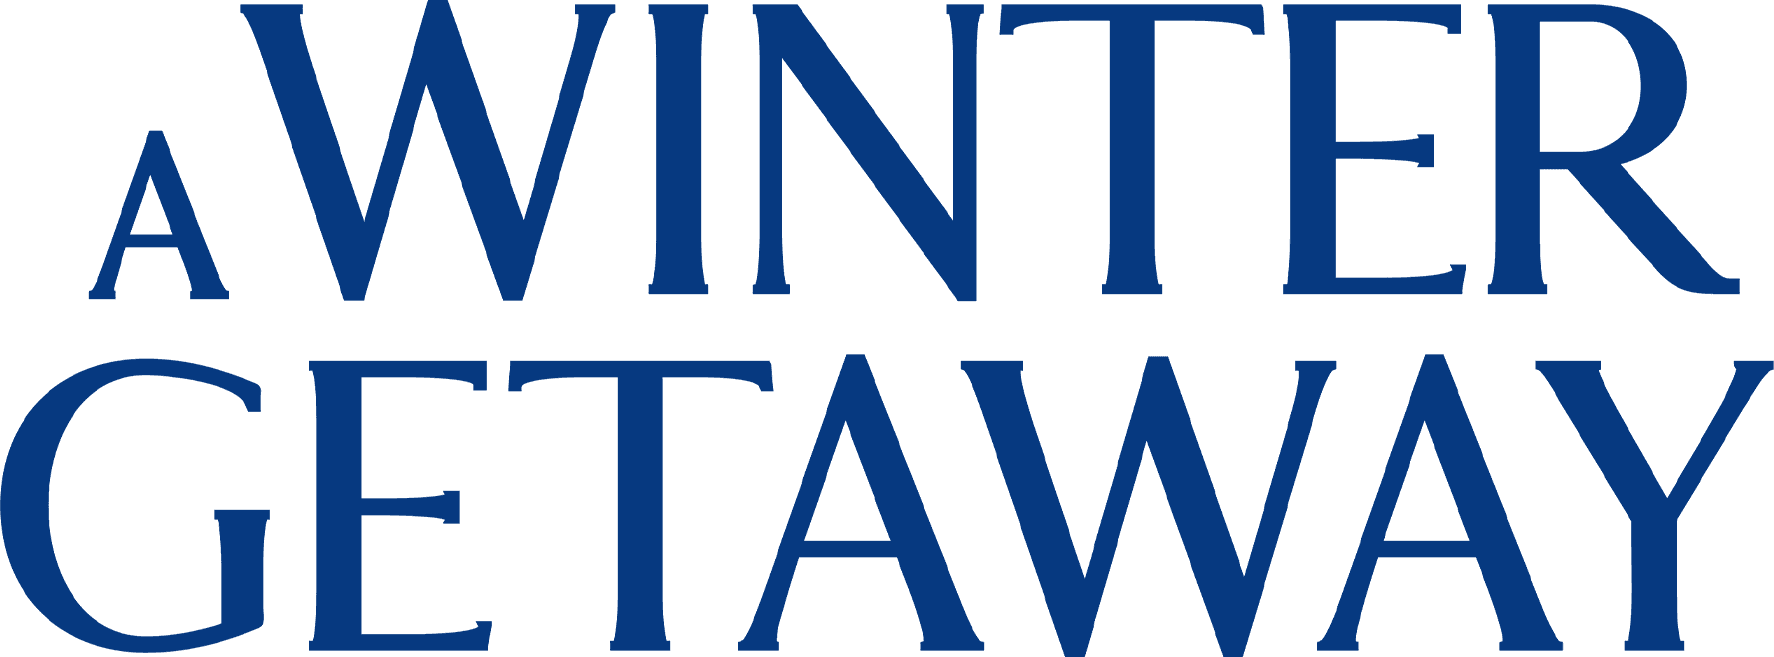 A Winter Getaway logo